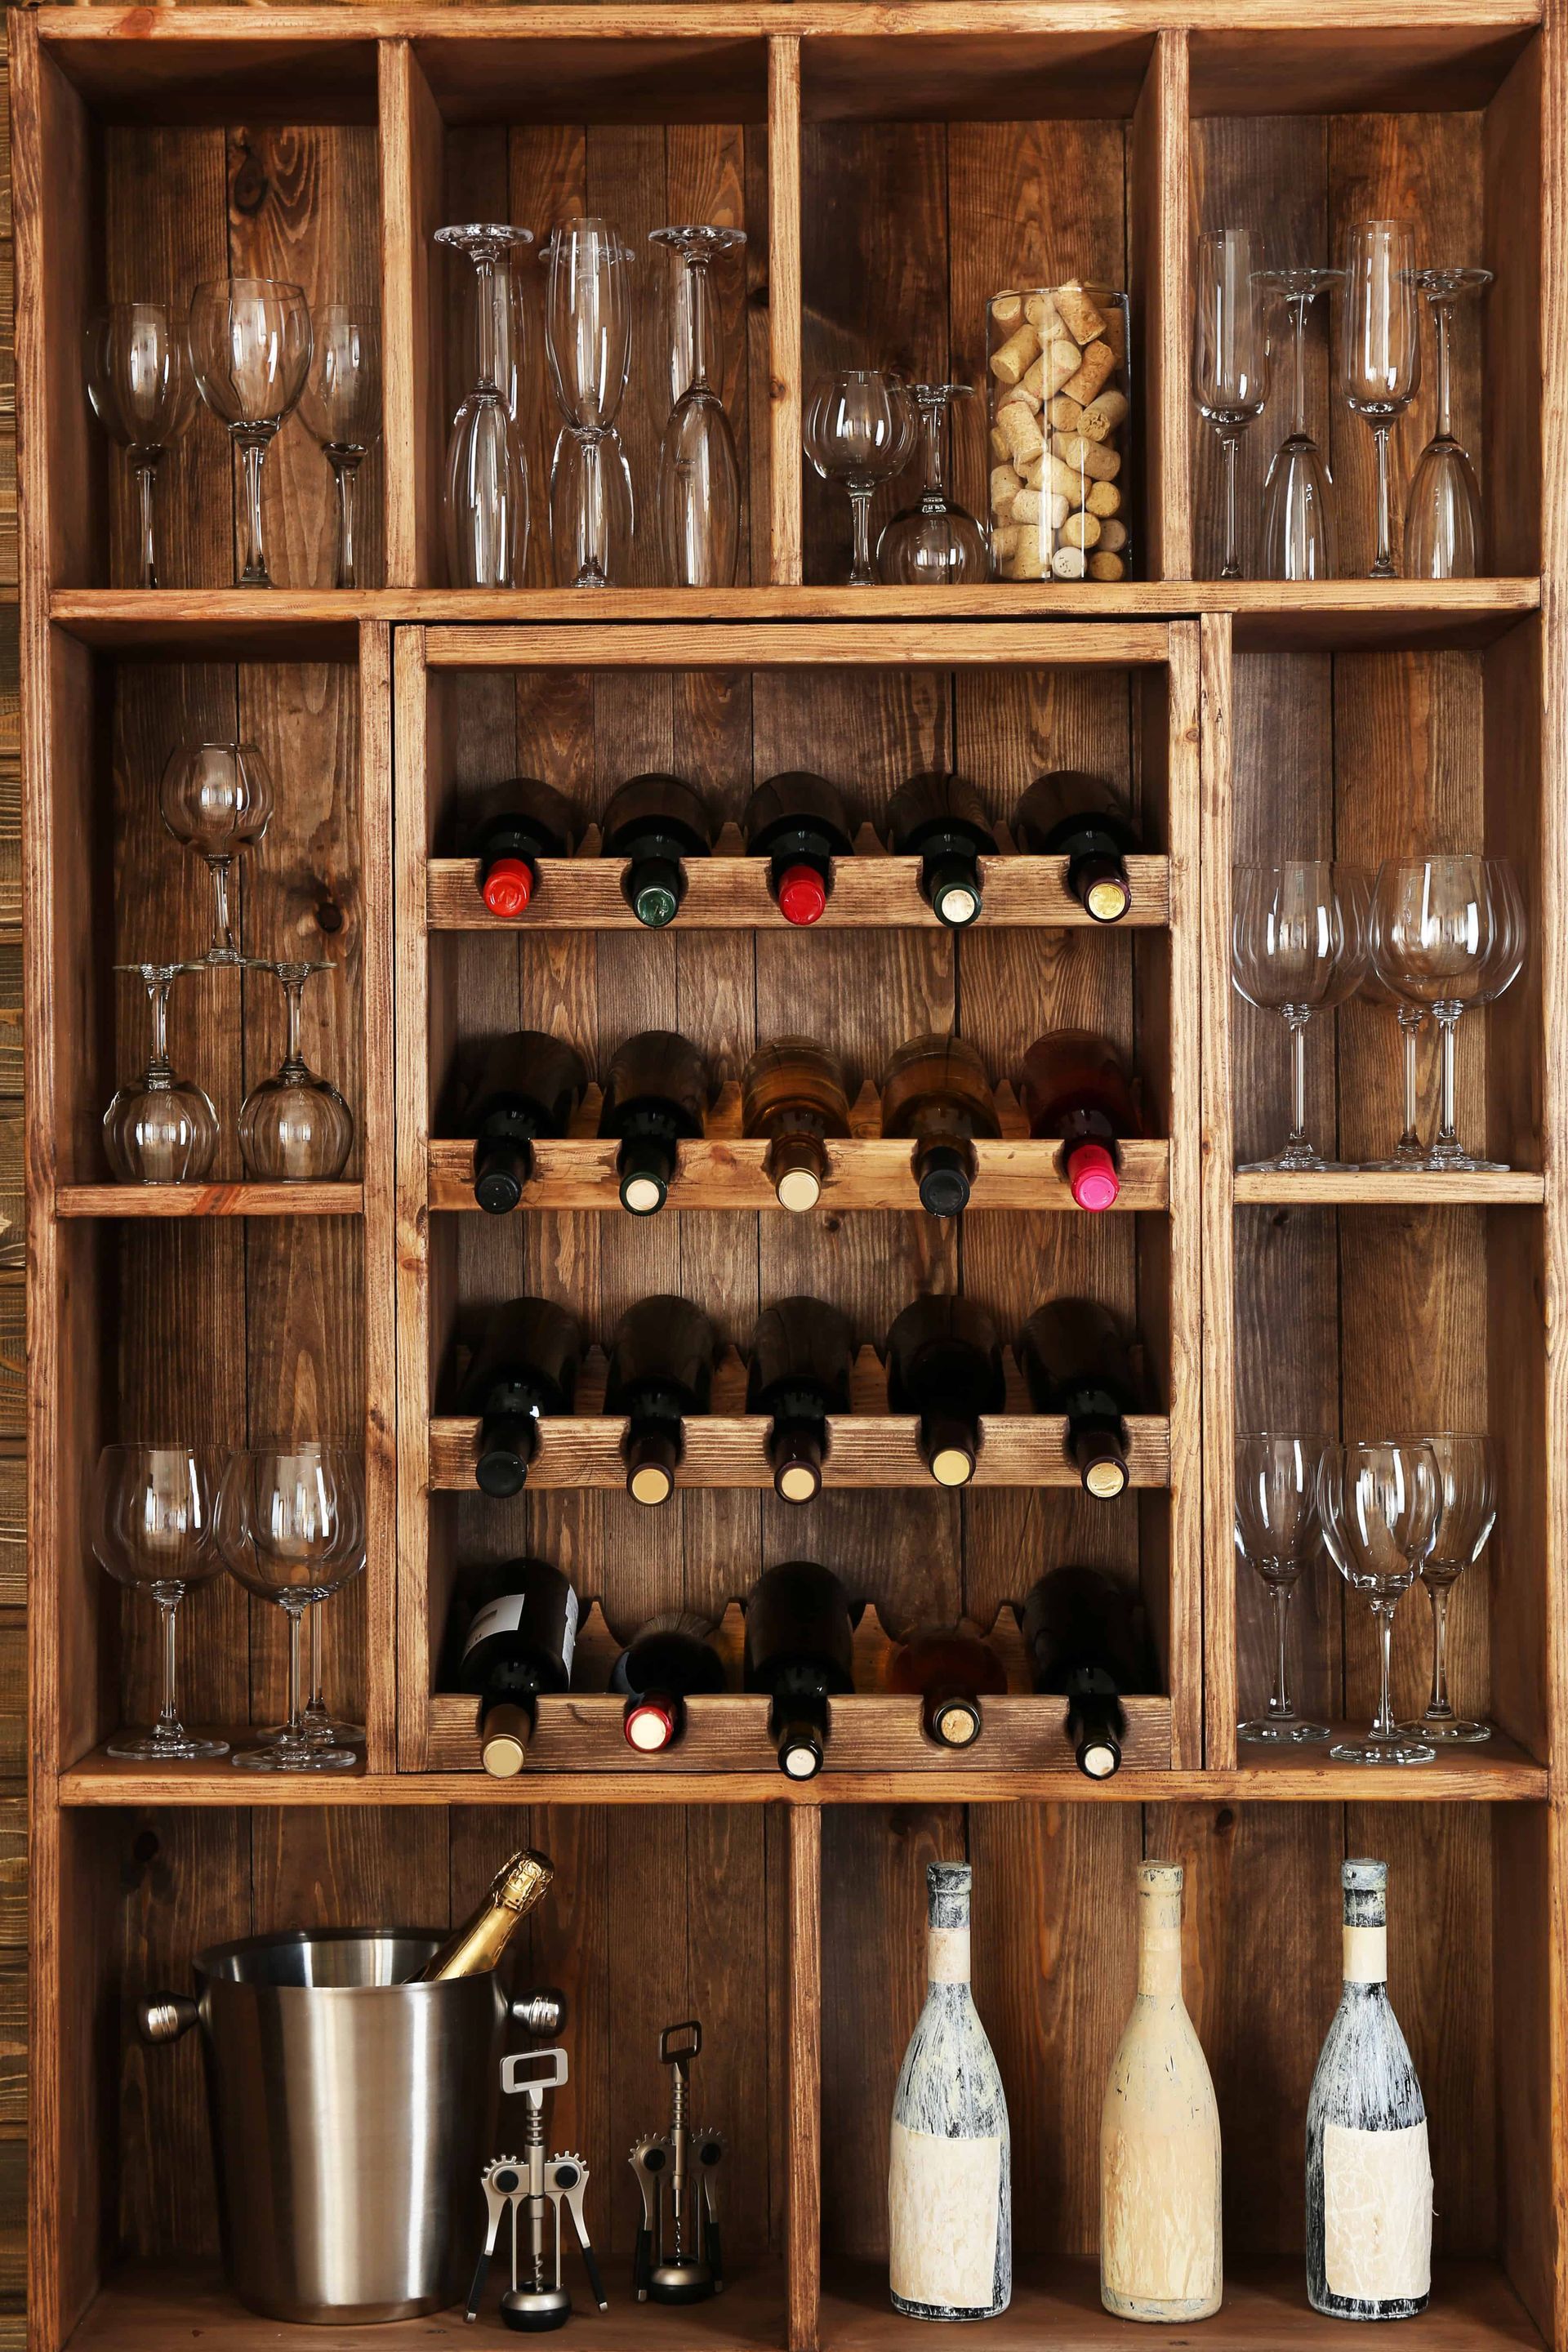 A wine cabinet